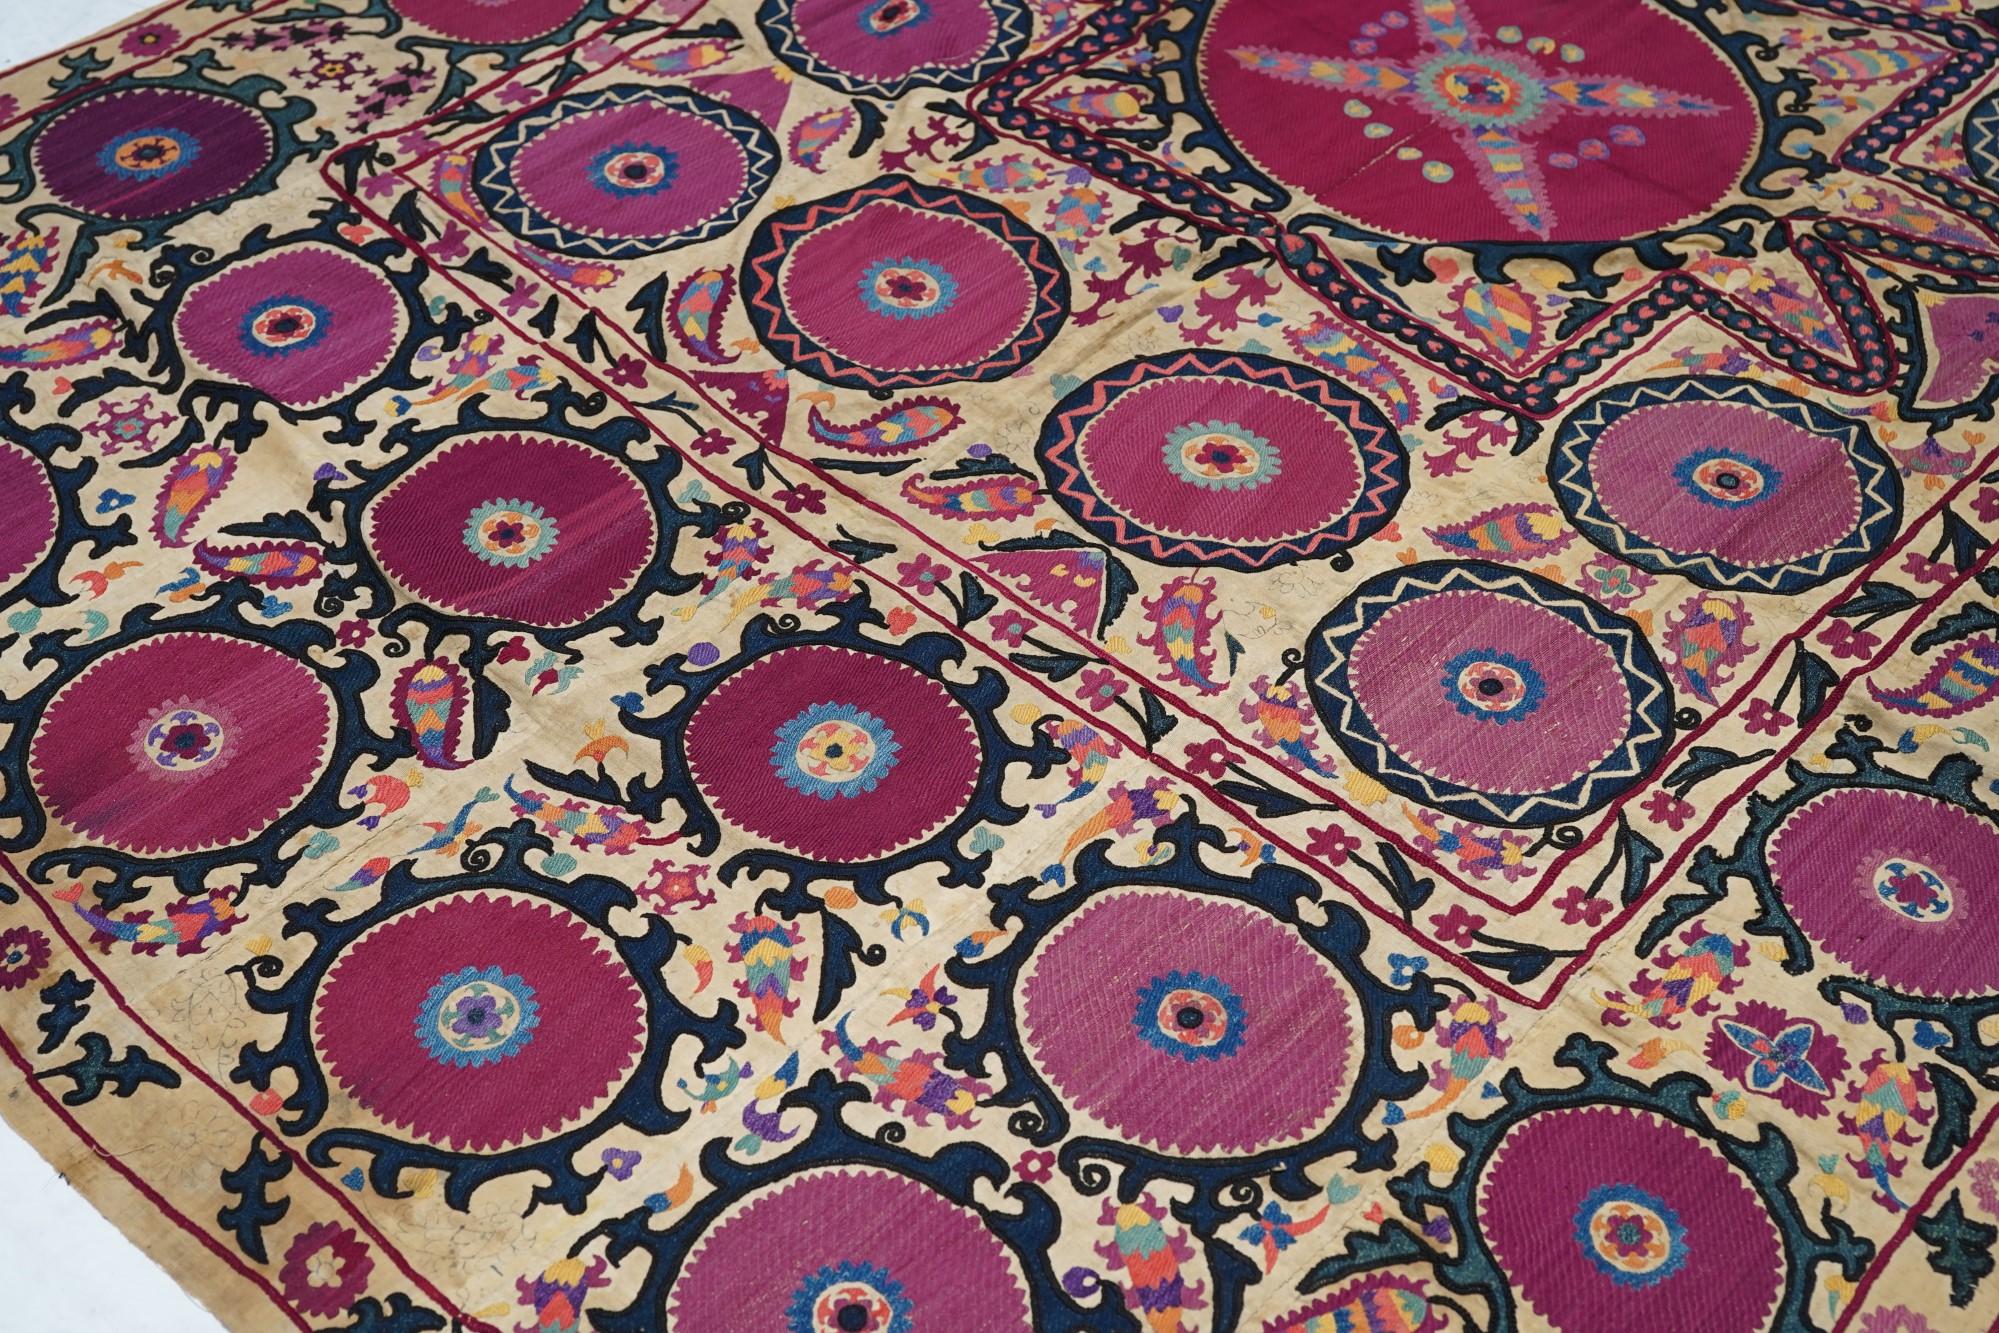 Late 19th Century Antique Uzbekistan Suzani Textile Rug For Sale